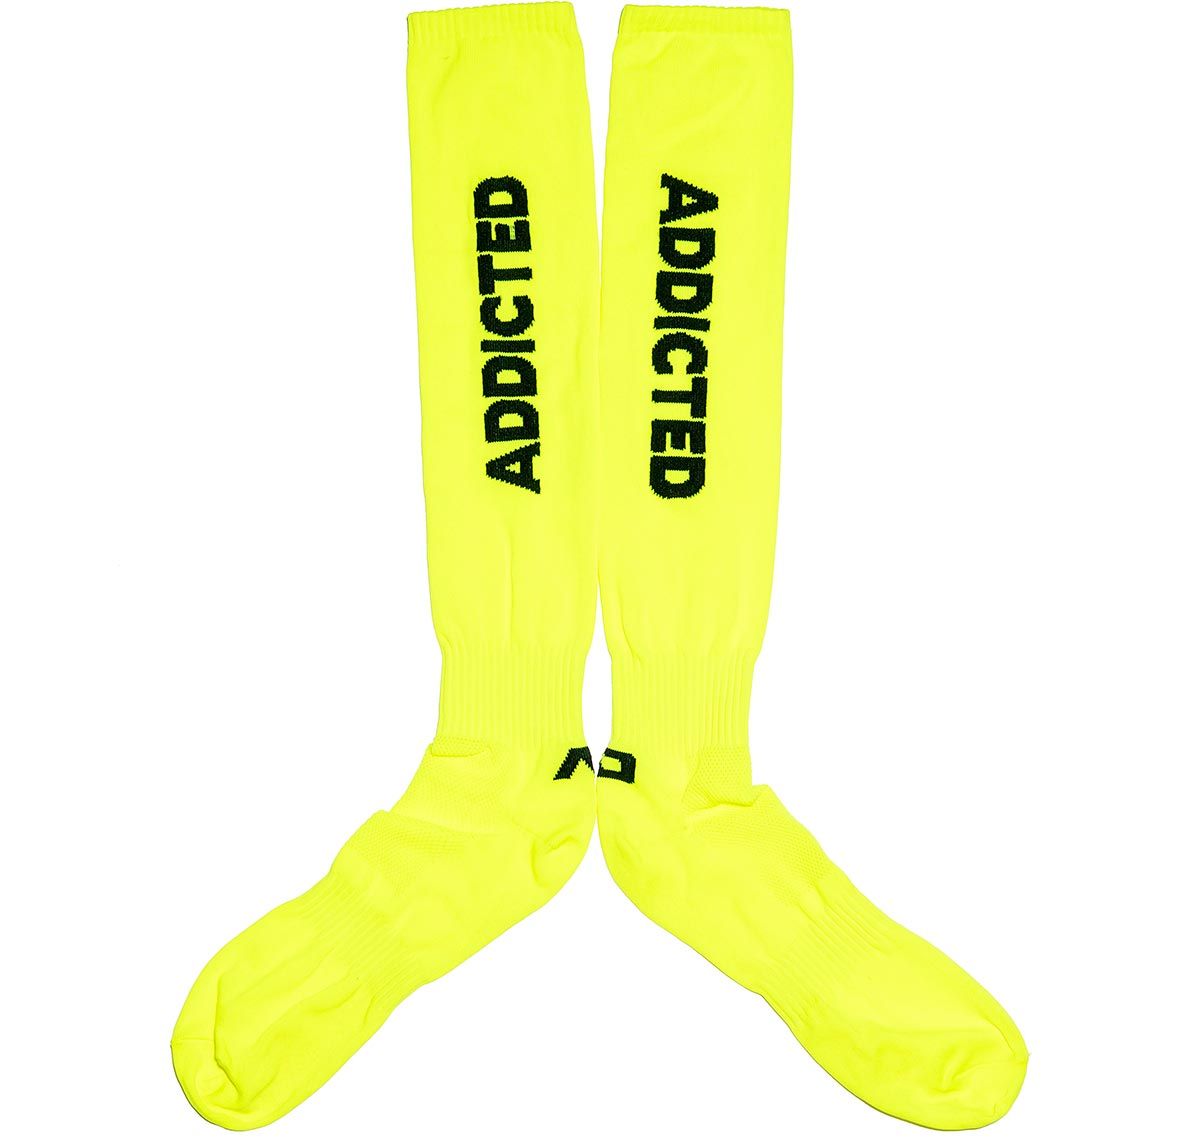 Addicted Chaussettes de sport ADDICTED NEON SOCKS AD1155, jaune fluo